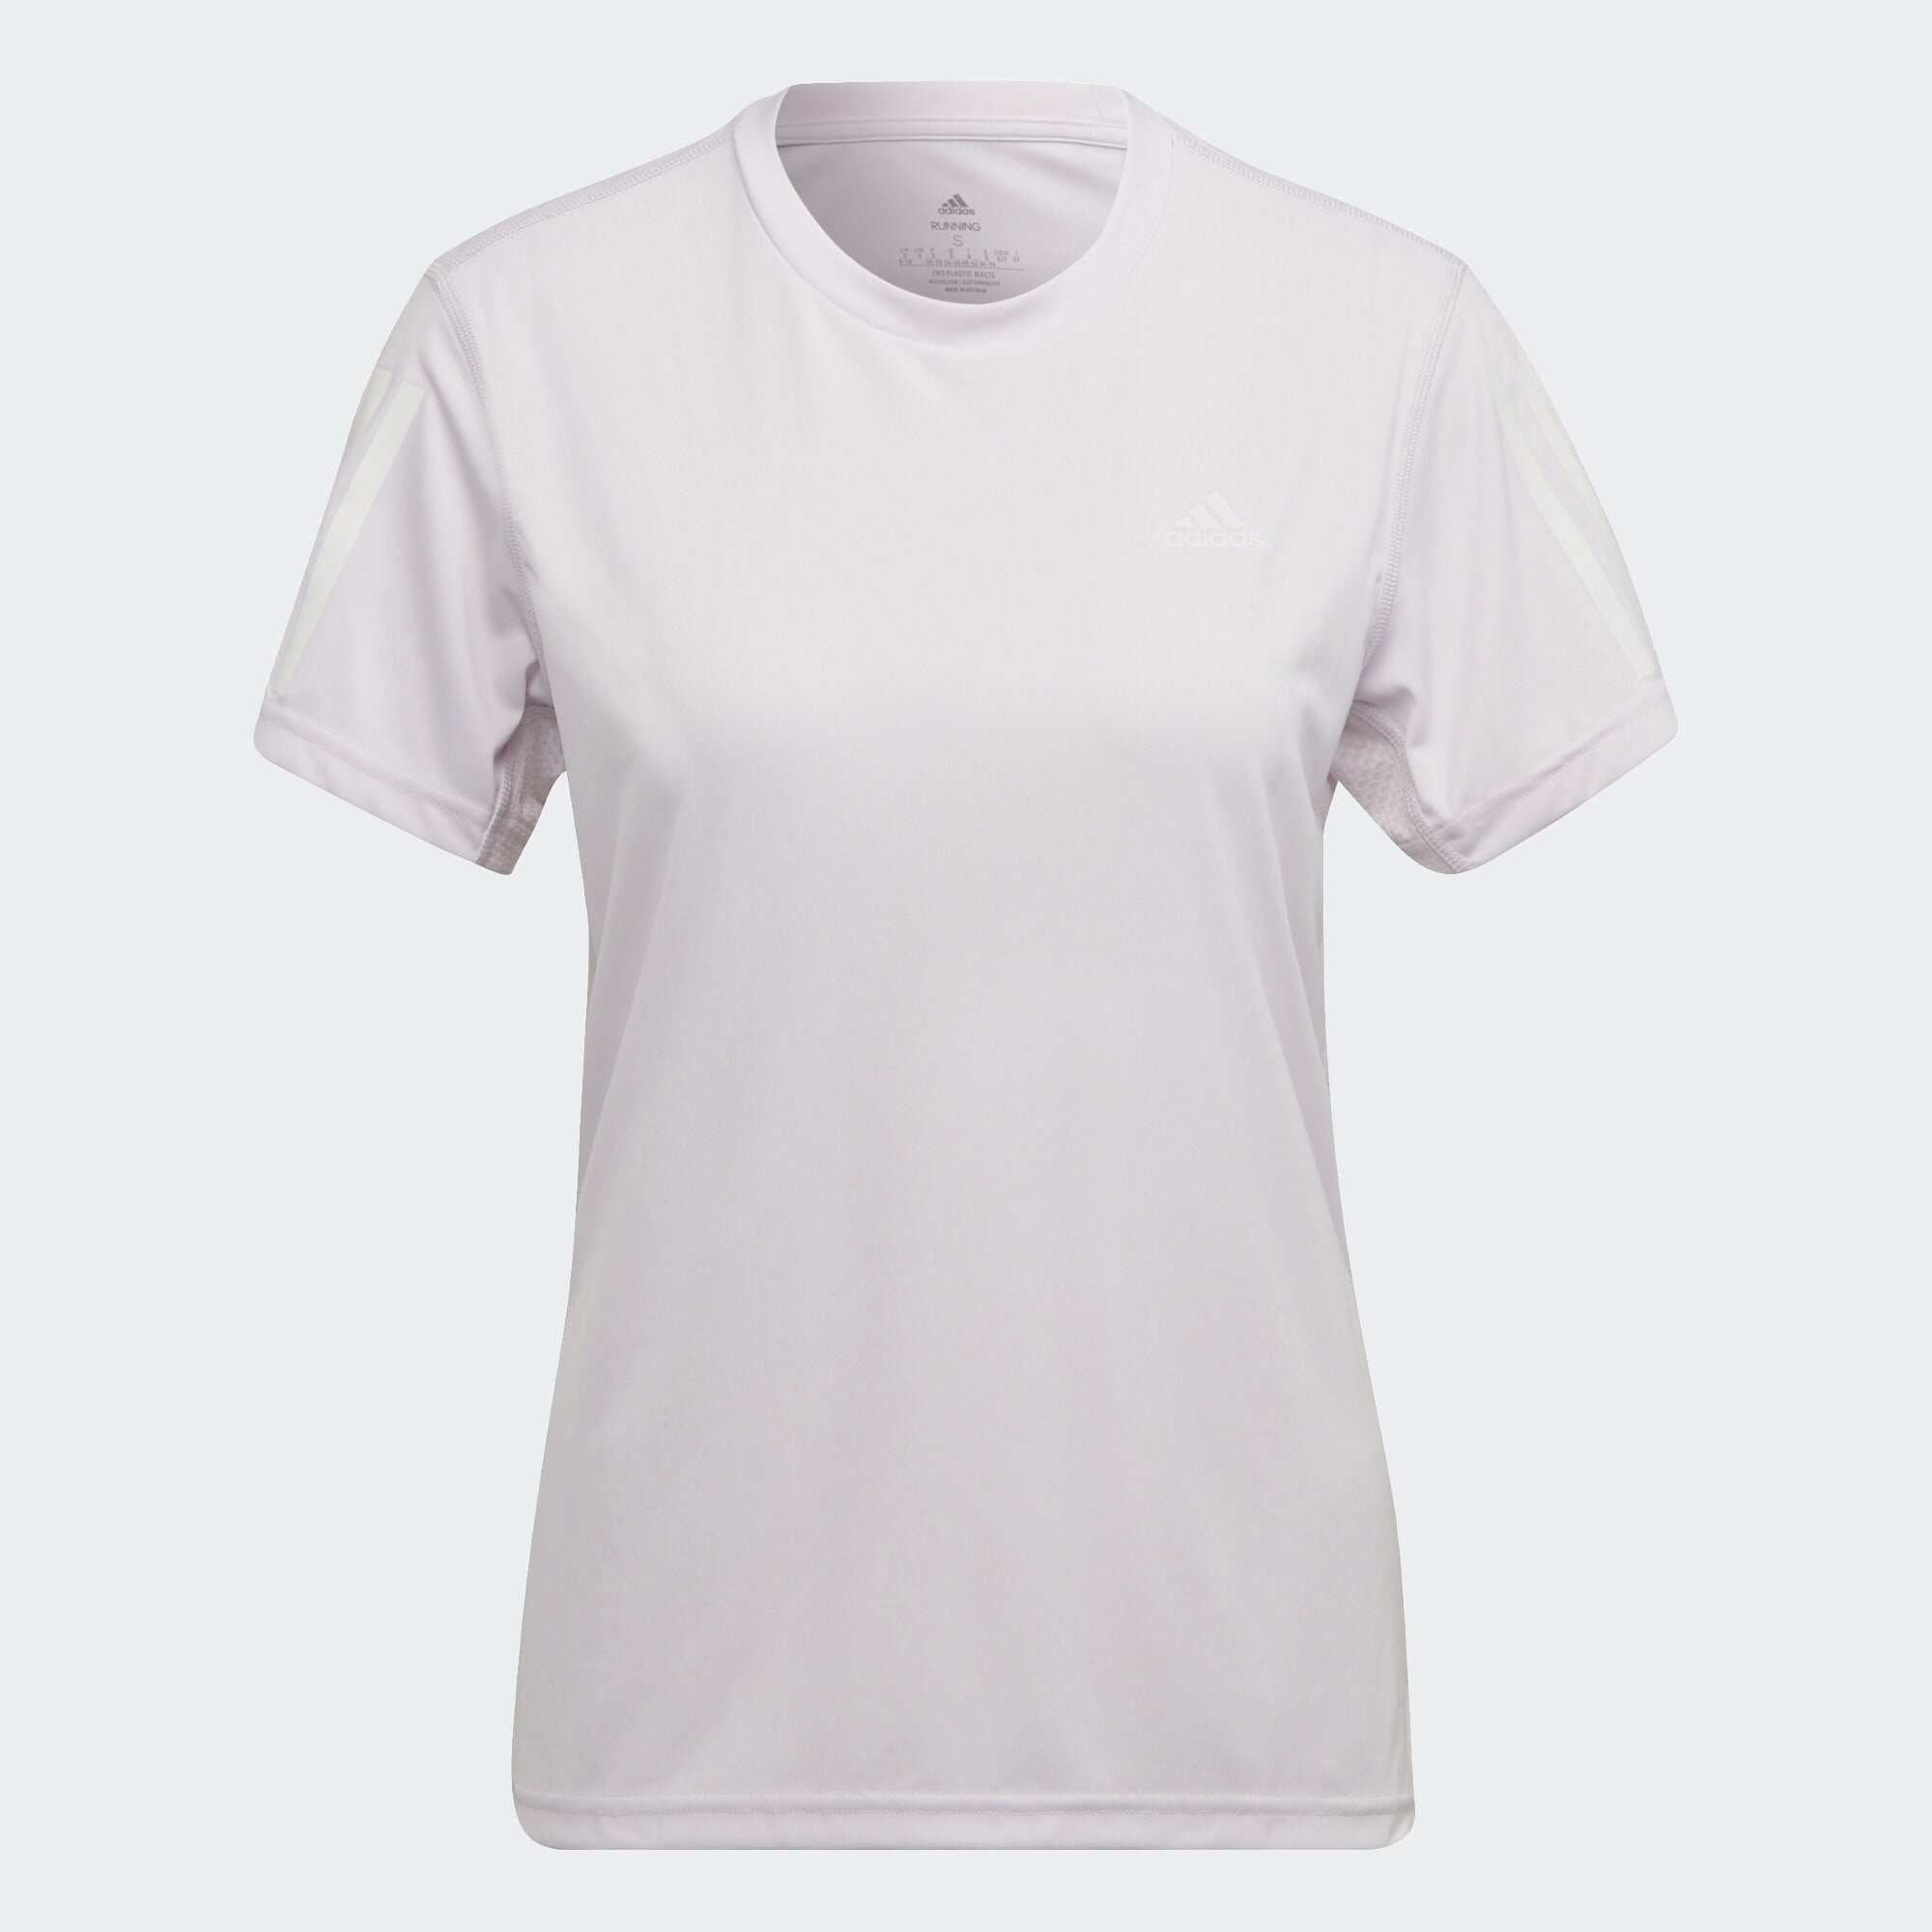 Adidas Own the Run T-shirt Womens - Buy Online - Ph: 1800-370-766 - & ZipPay Available!